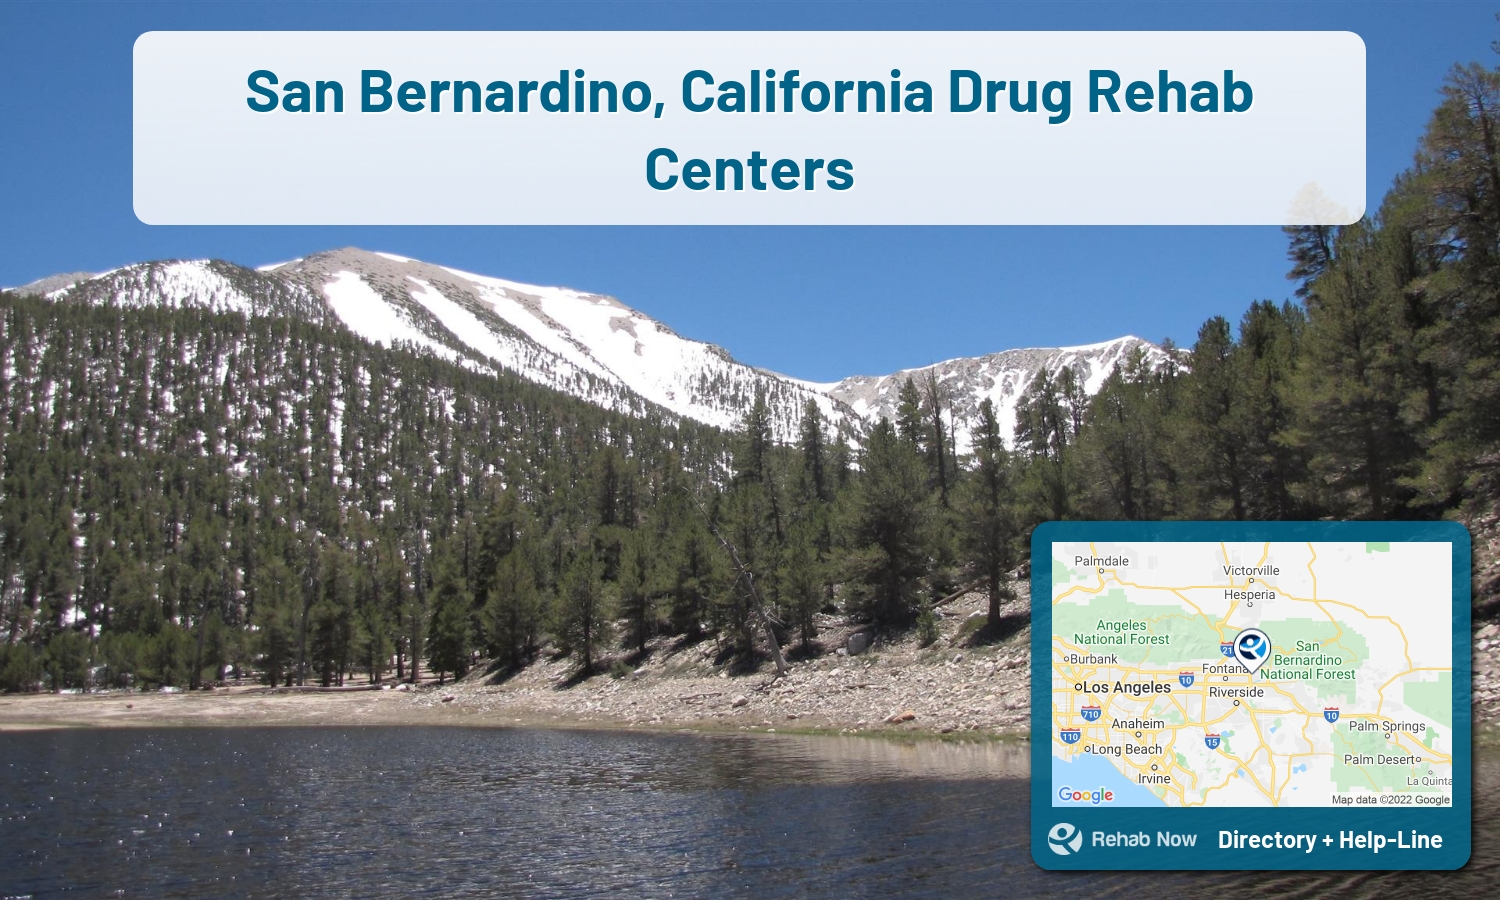 San Bernardino, CA Treatment Centers. Find drug rehab in San Bernardino, California, or detox and treatment programs. Get the right help now!